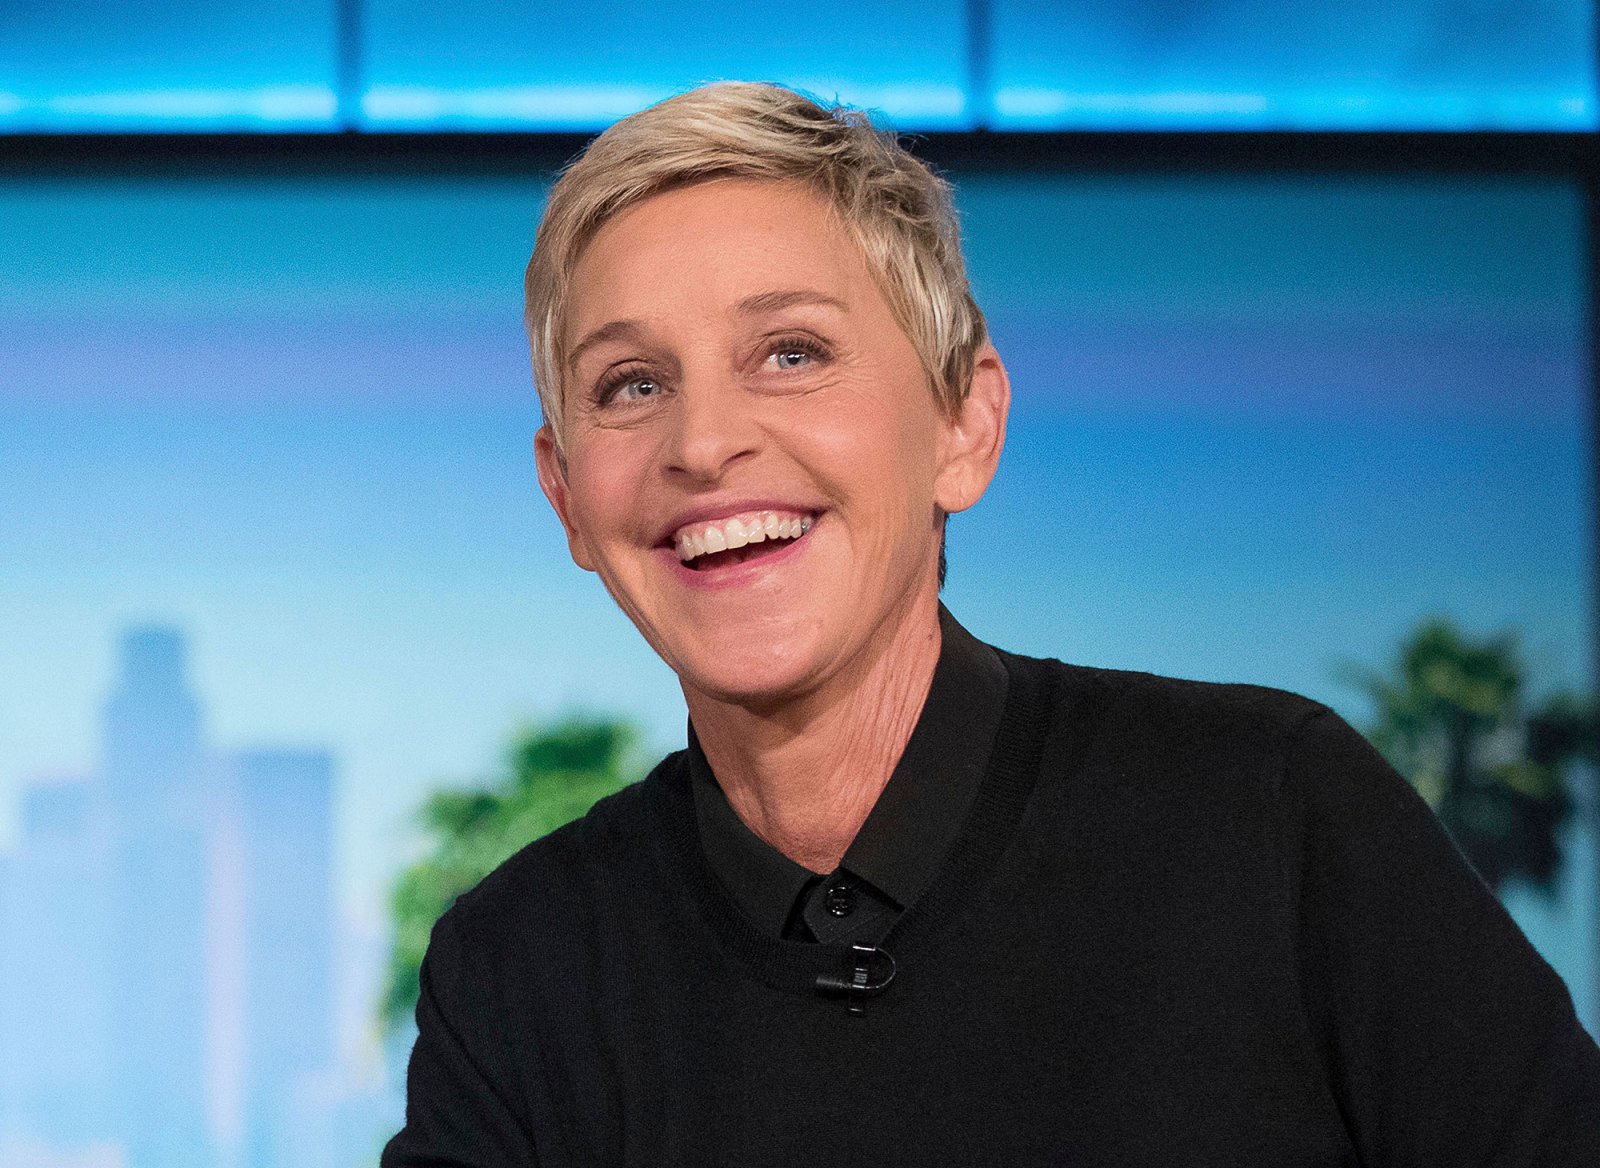 Ellen DeGeneres Gets Emotional Seeing the Crew's Families in Audience